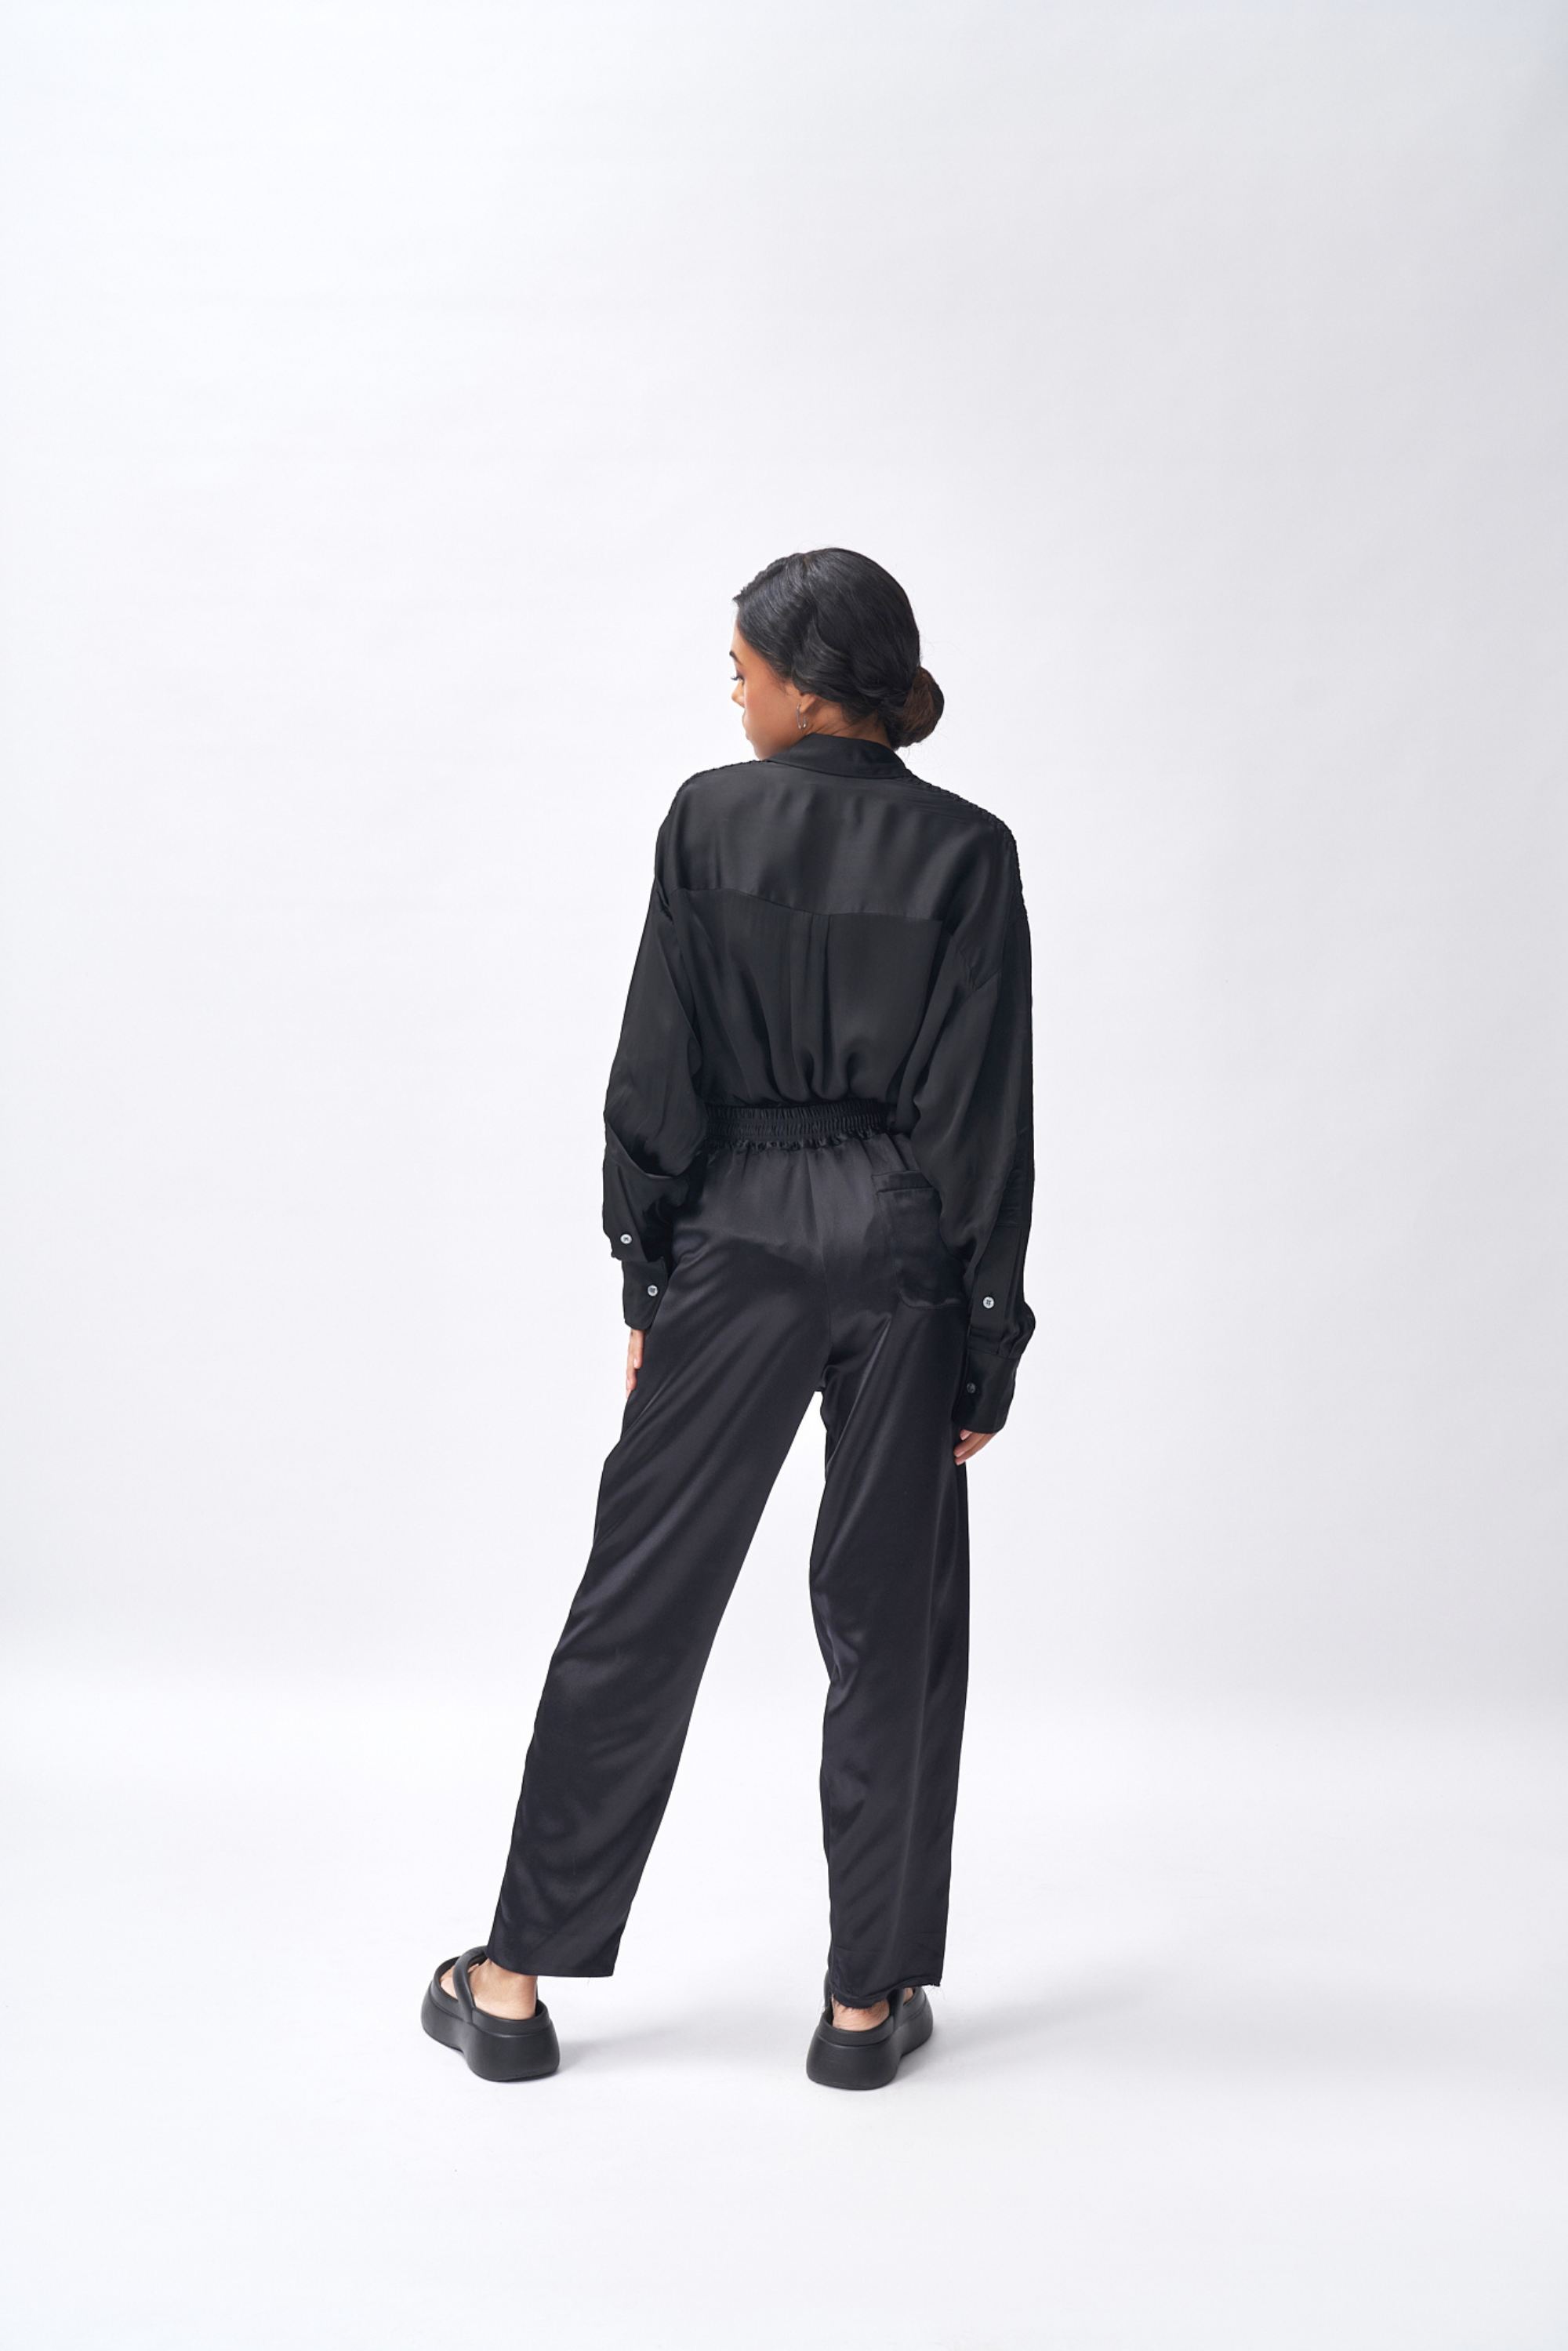 Buy Black Trousers & Pants for Women by Amydus Online | Ajio.com